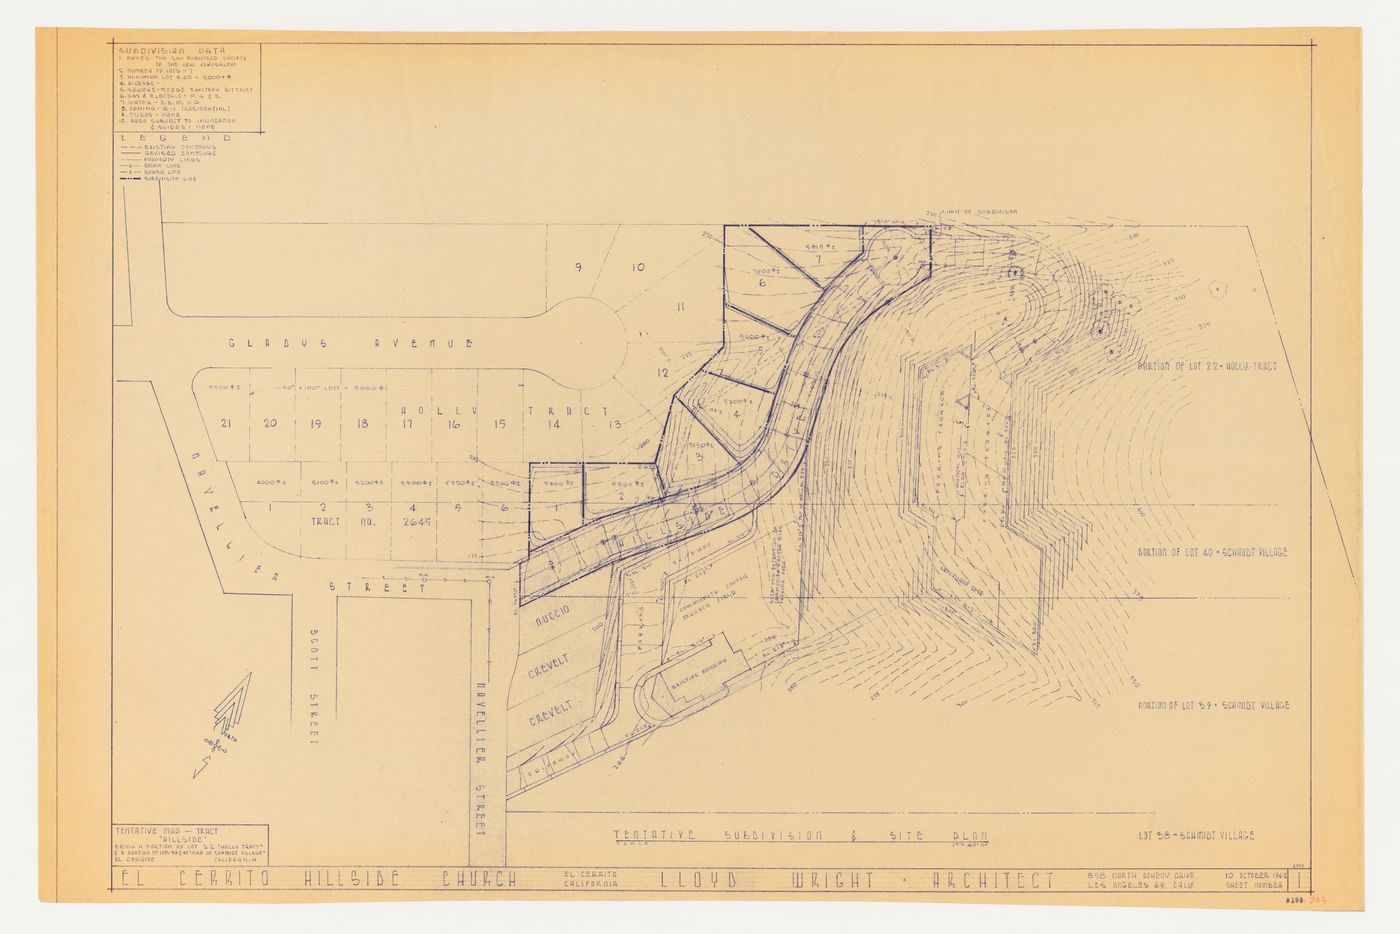 Swedenborg Memorial Chapel, El Cerrito, California: Site plan showing lot subdivision and road plan